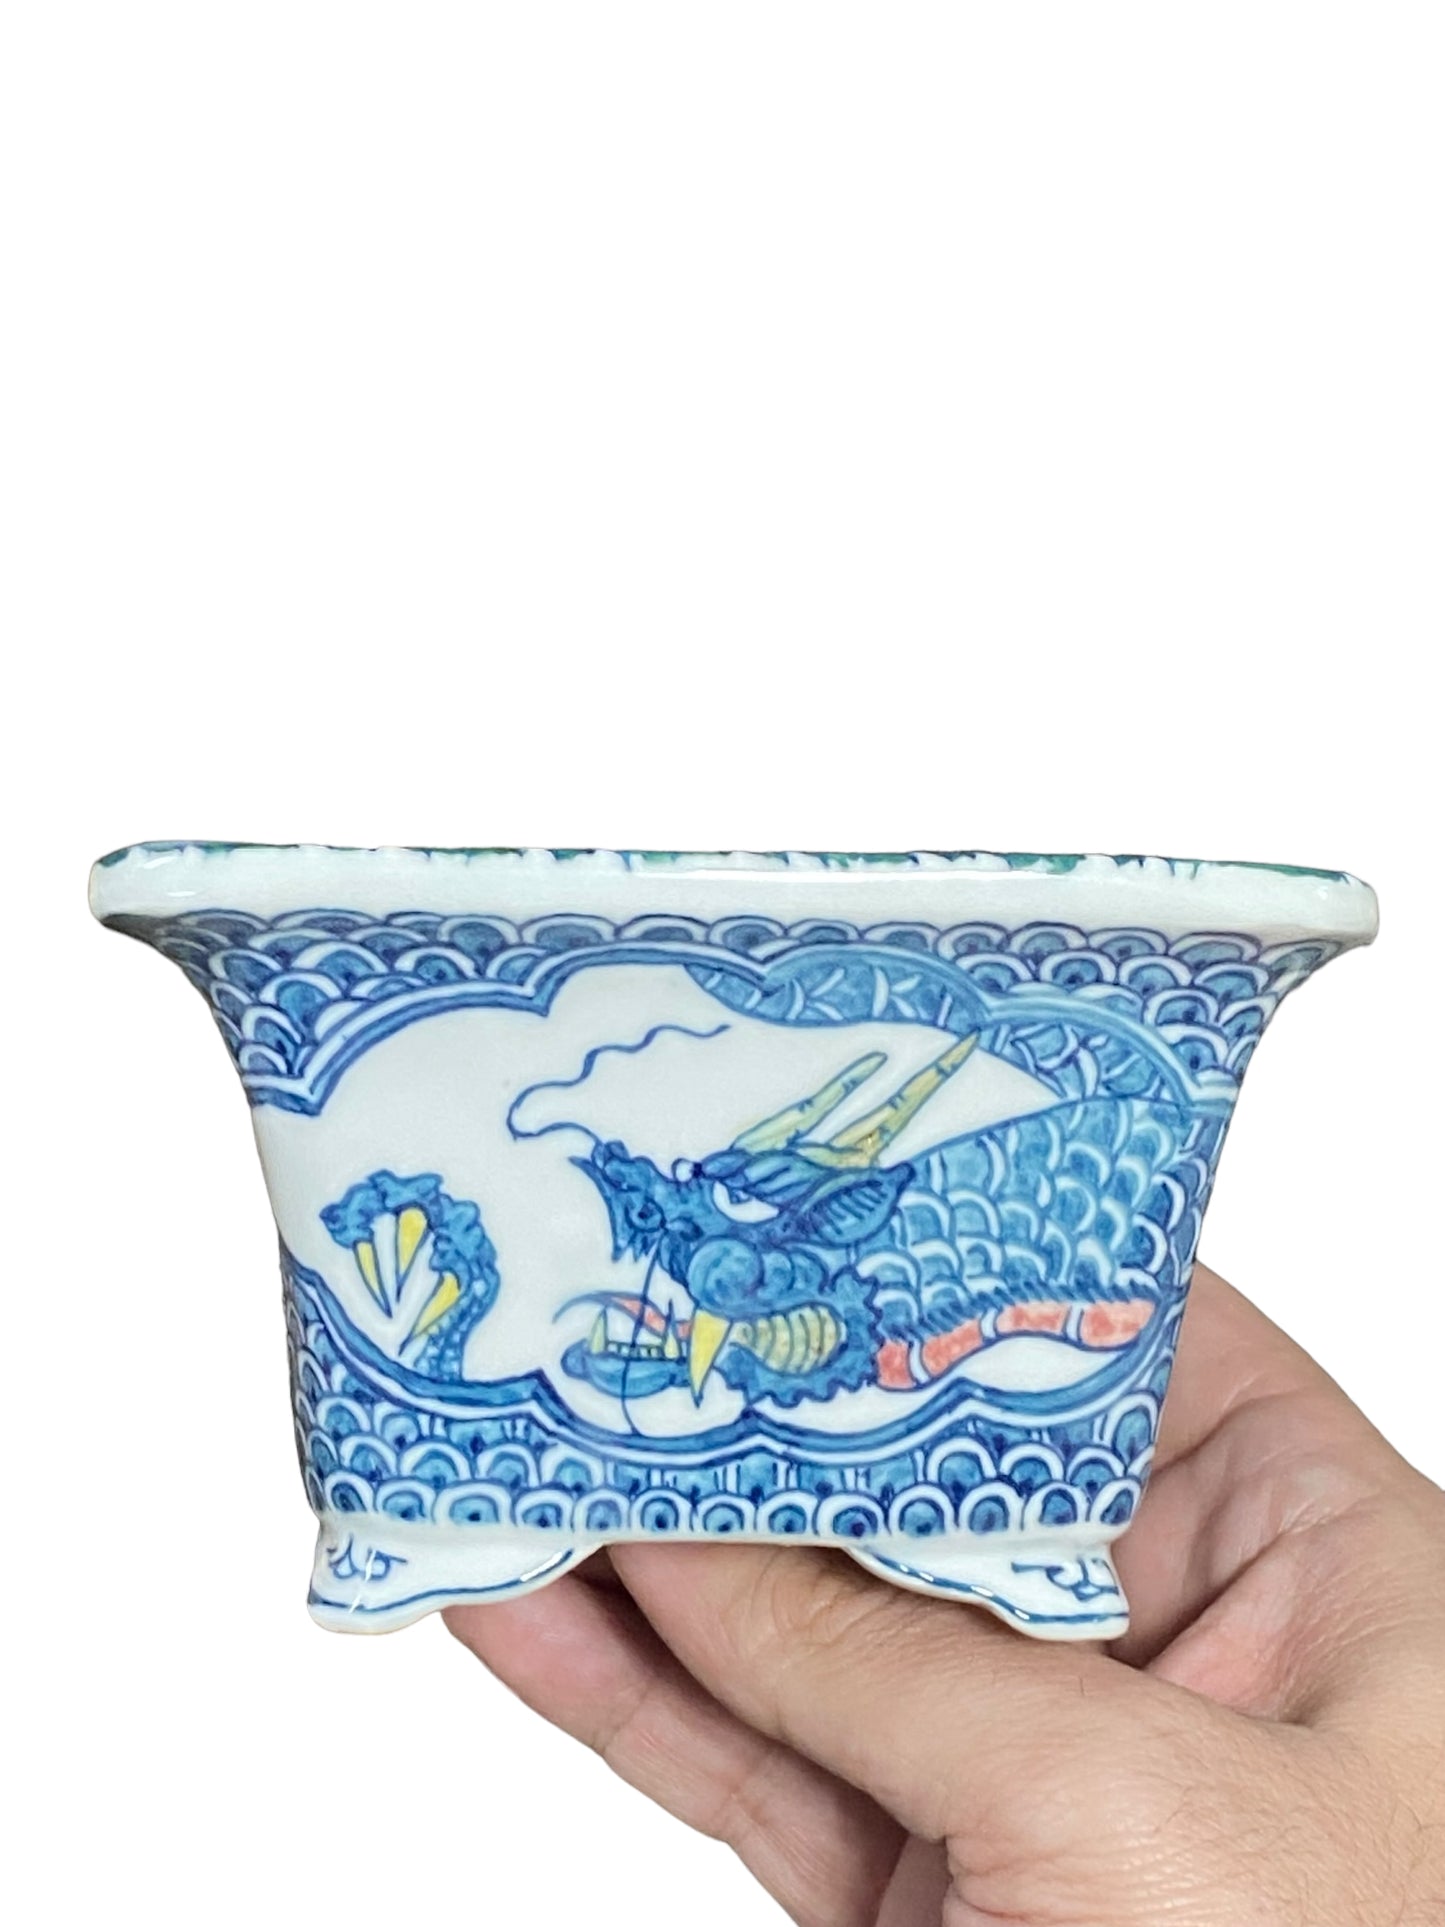 Shoseki and Shibakatsu Collab - Painted Bonsai Pot